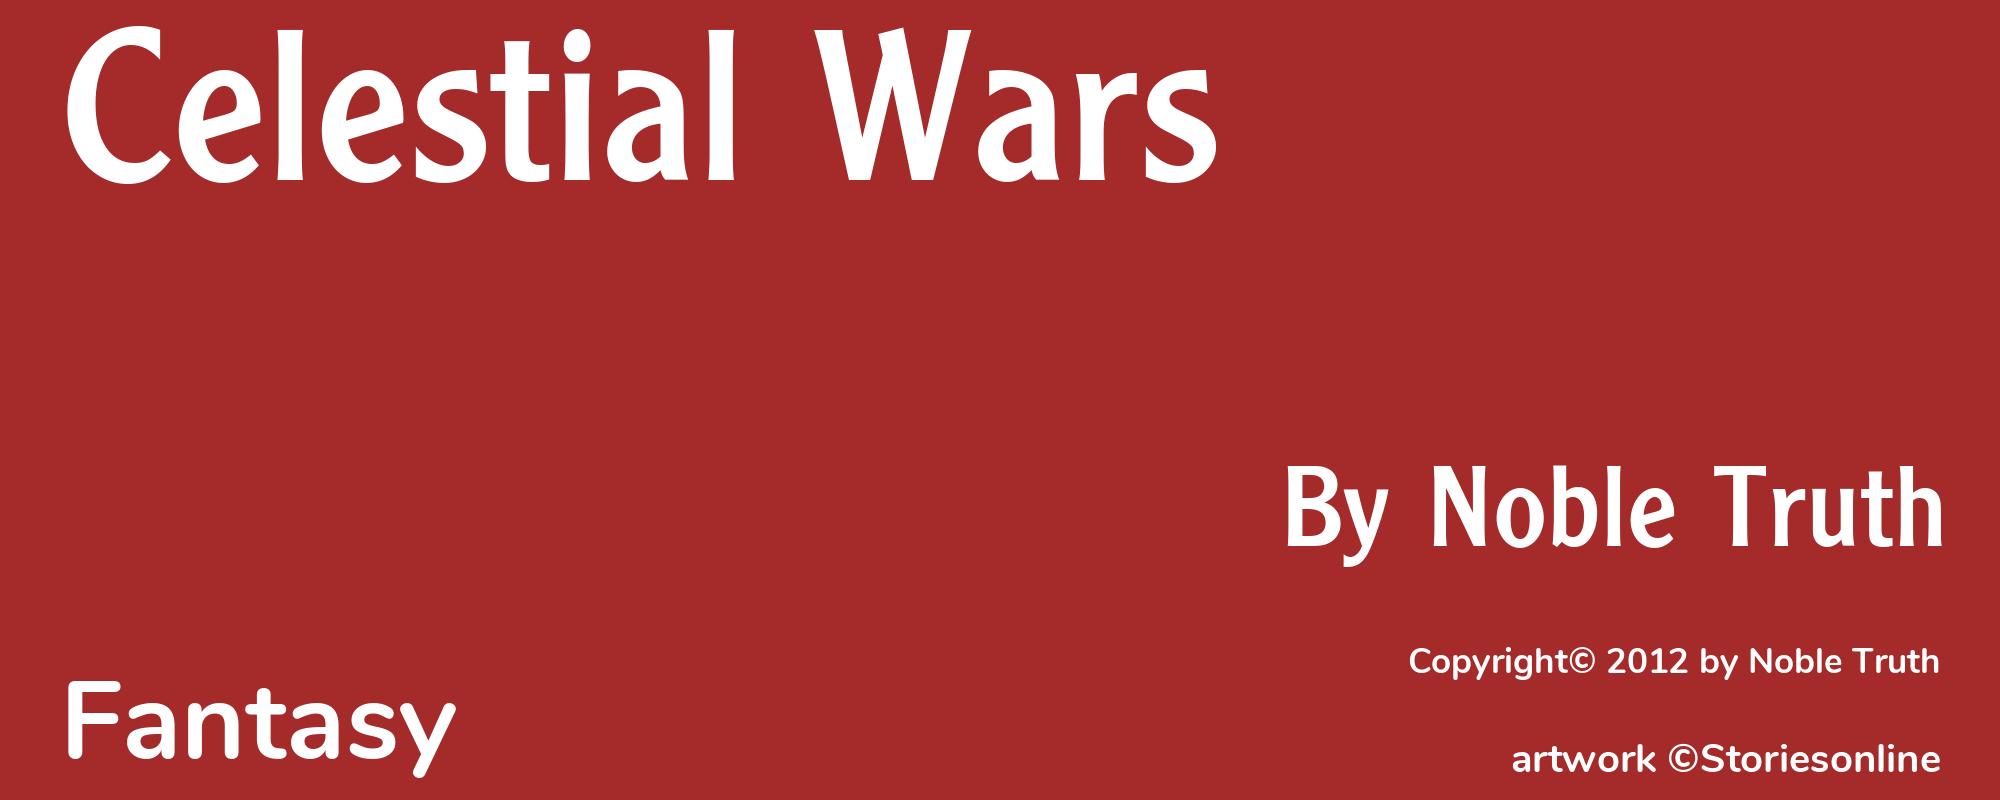 Celestial Wars - Cover